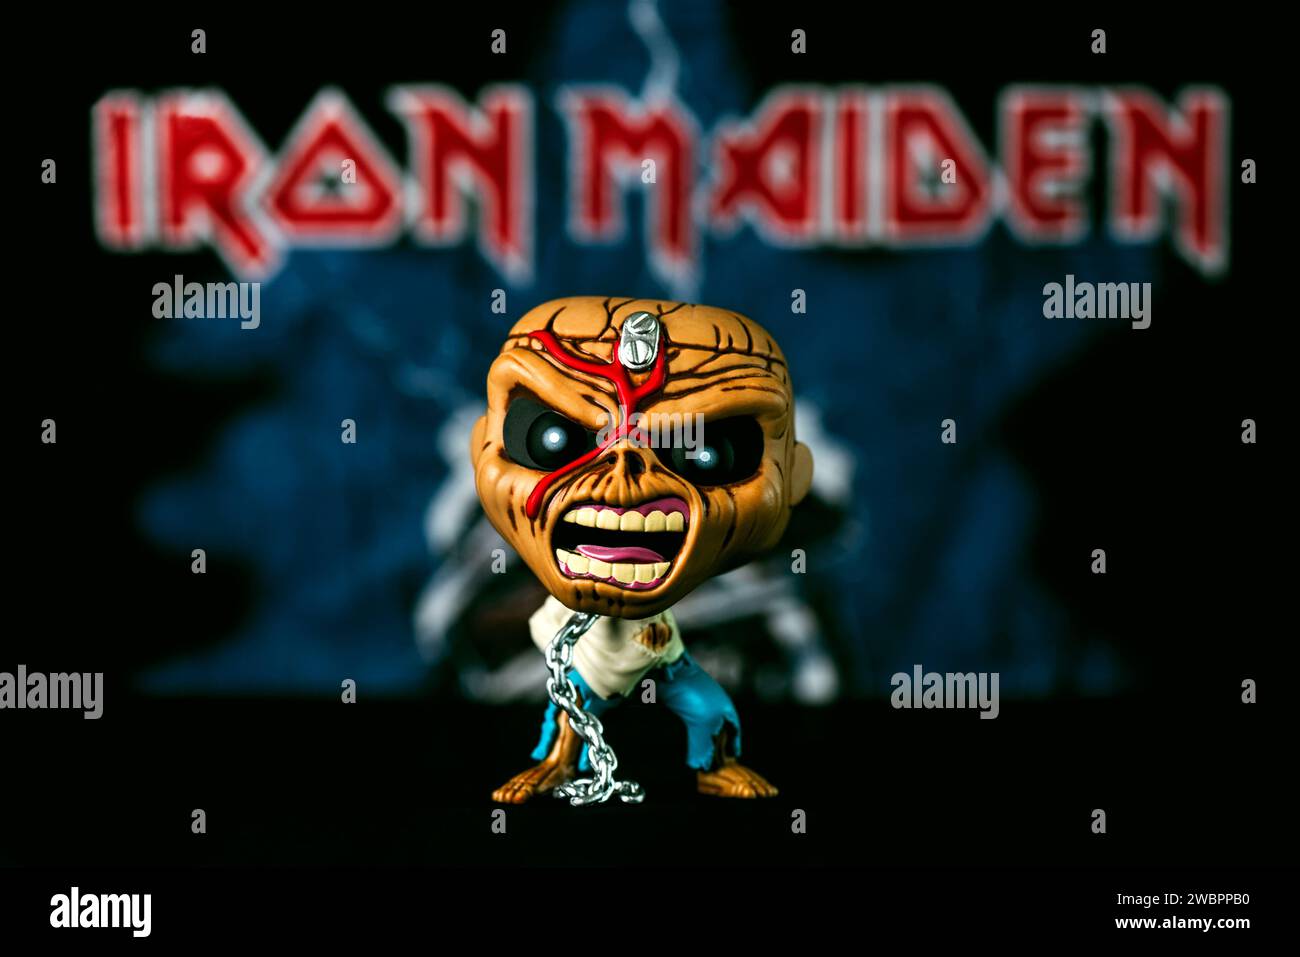 Funko POP vinyl figure of Piece of mind Eddie mascot of the British heavy metal band Iron Maiden in front of Iron Maiden poster. Illustrative editoria Stock Photo